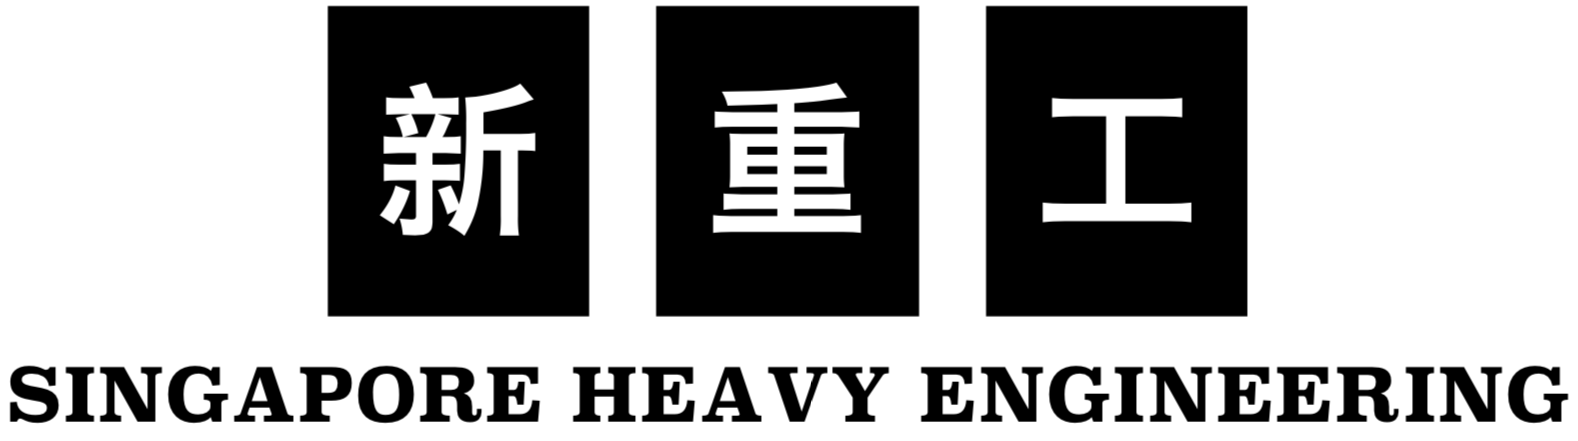 Singapore Heavy Engineering Pte Ltd Career 21 Glints